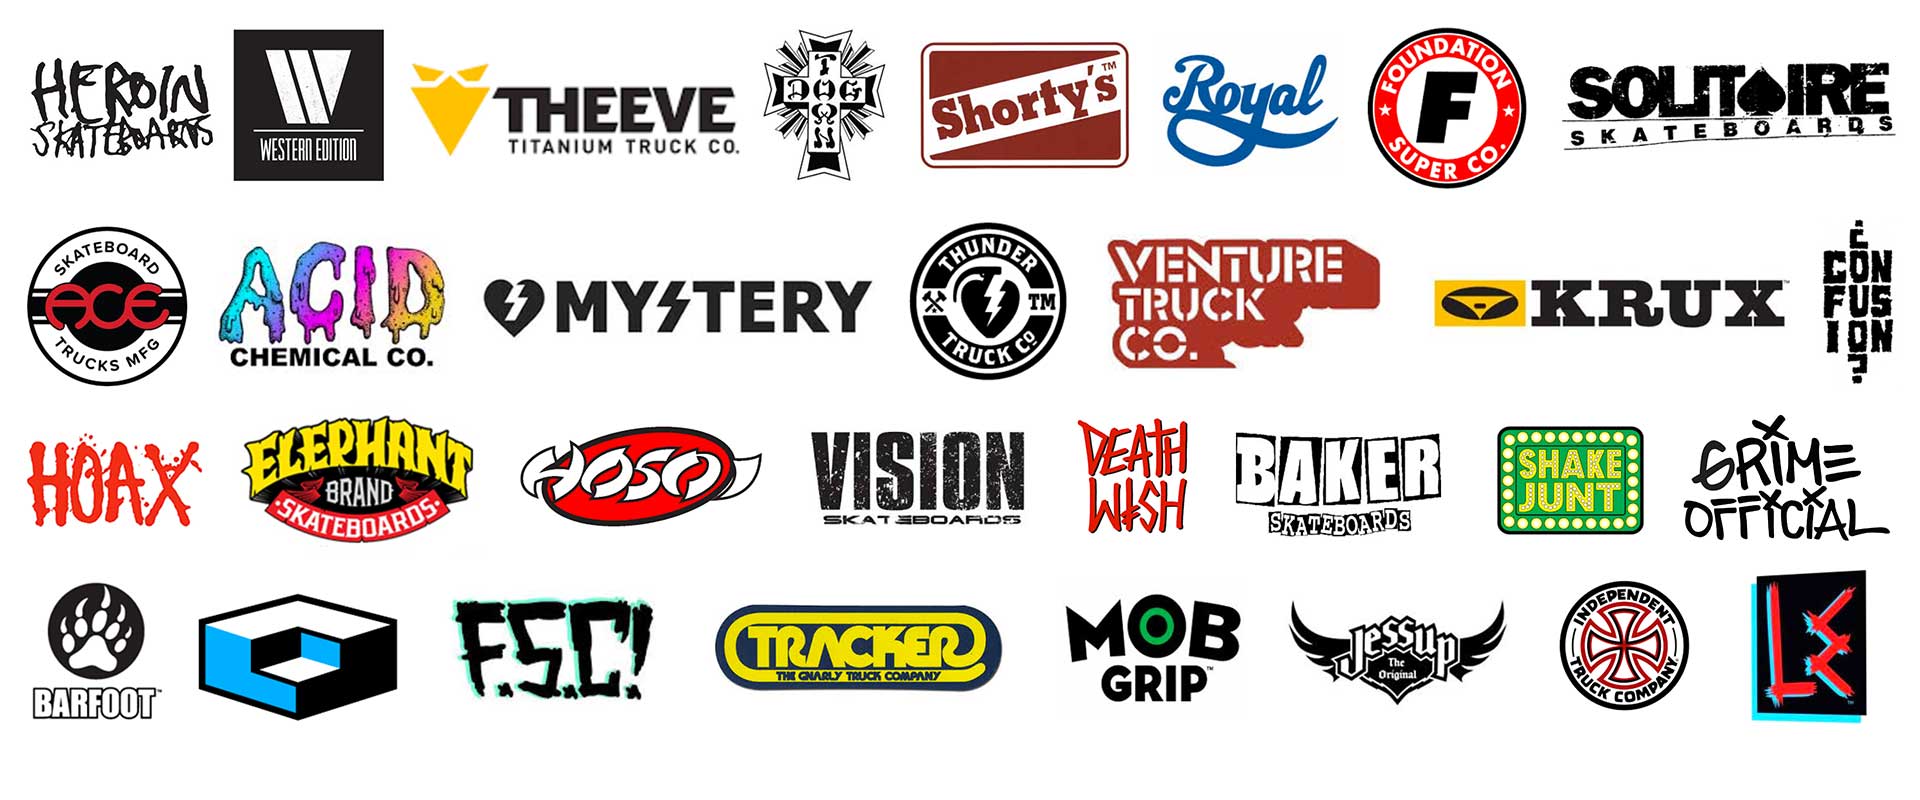 Skate Brand Logo - LogoDix